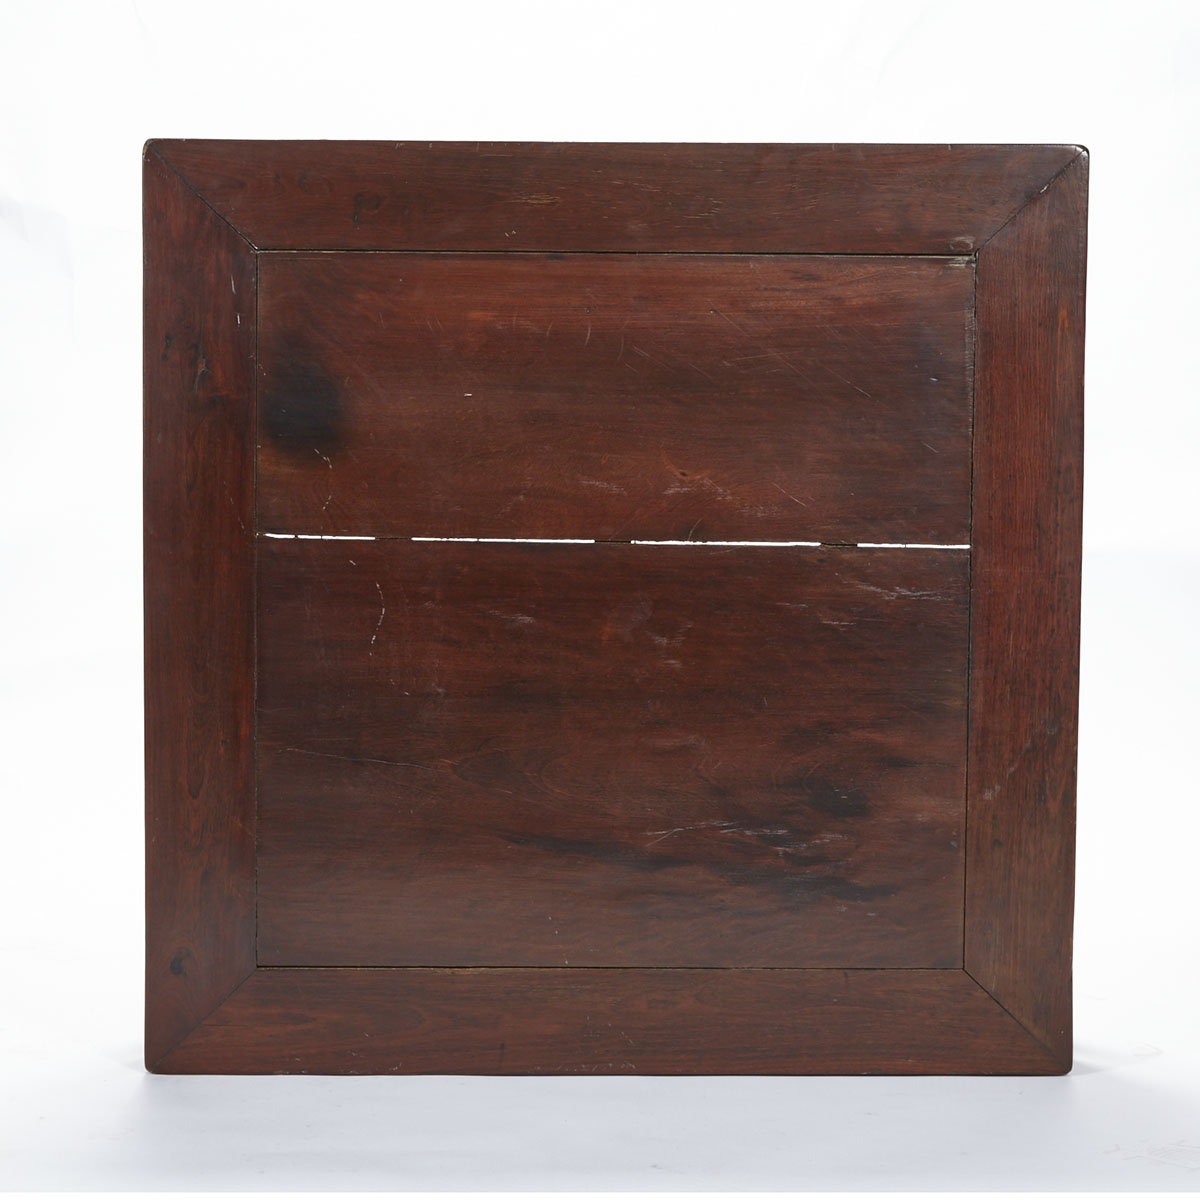 Hardwood Table, Early 20th Century